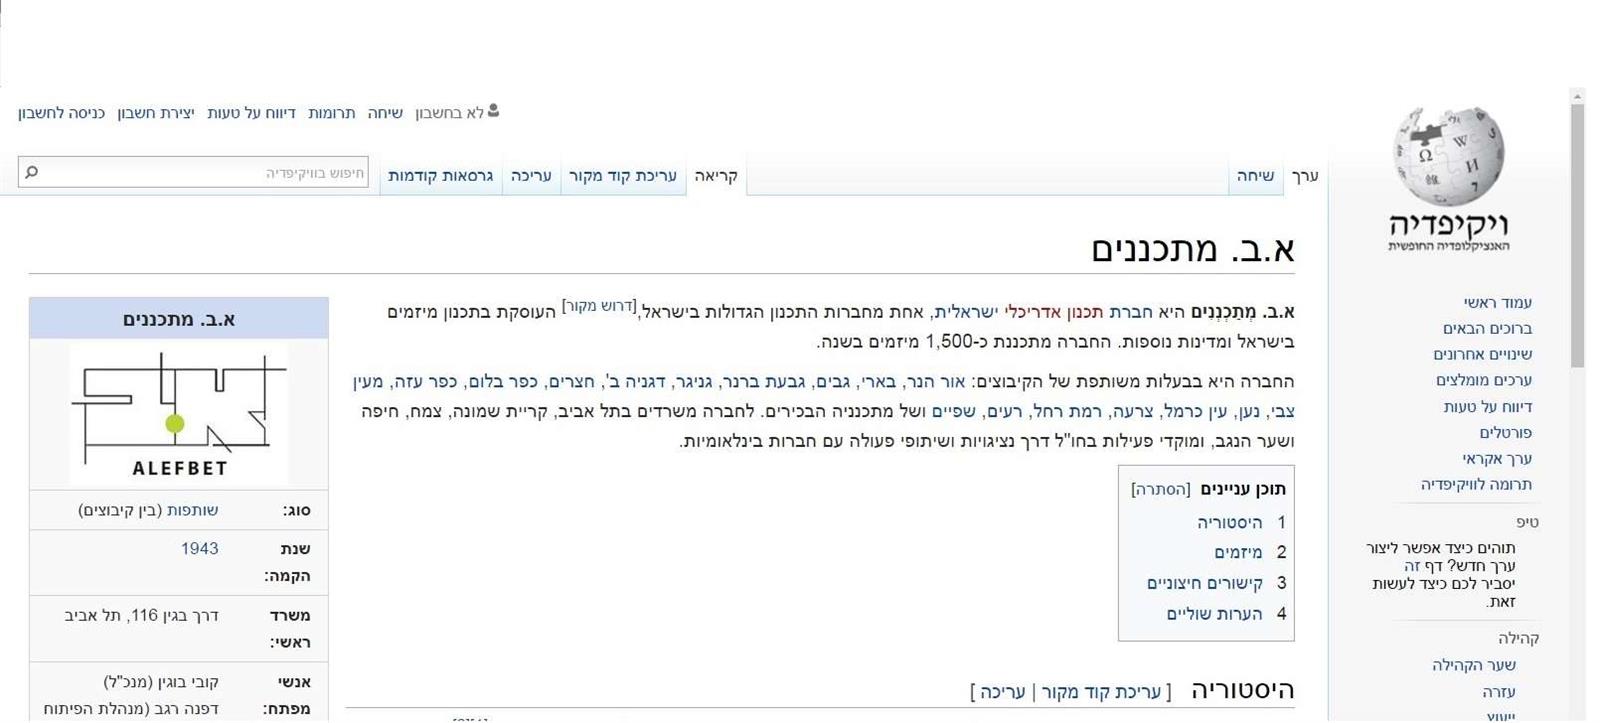 AlefBet on wikipedia